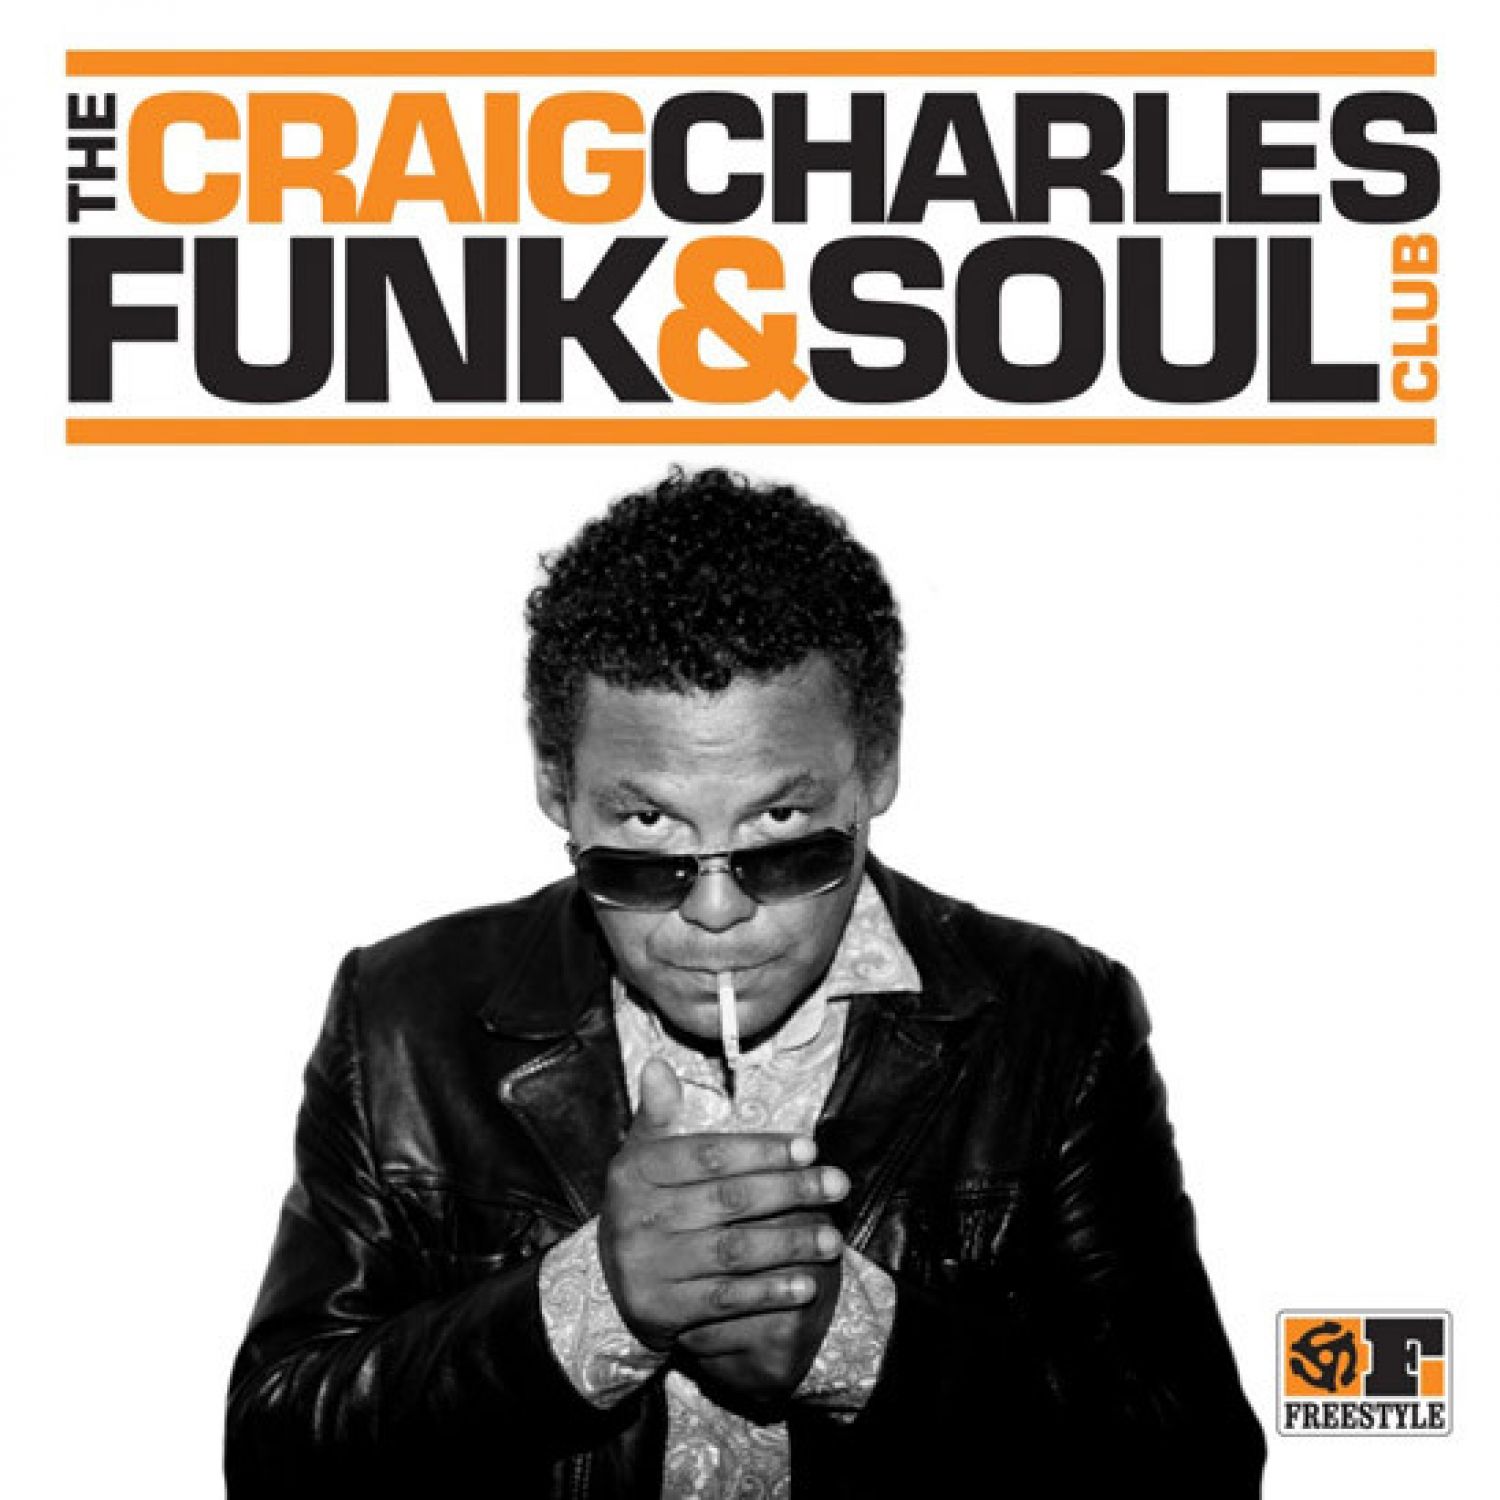  The Craig Charles Funk and Soul Club 